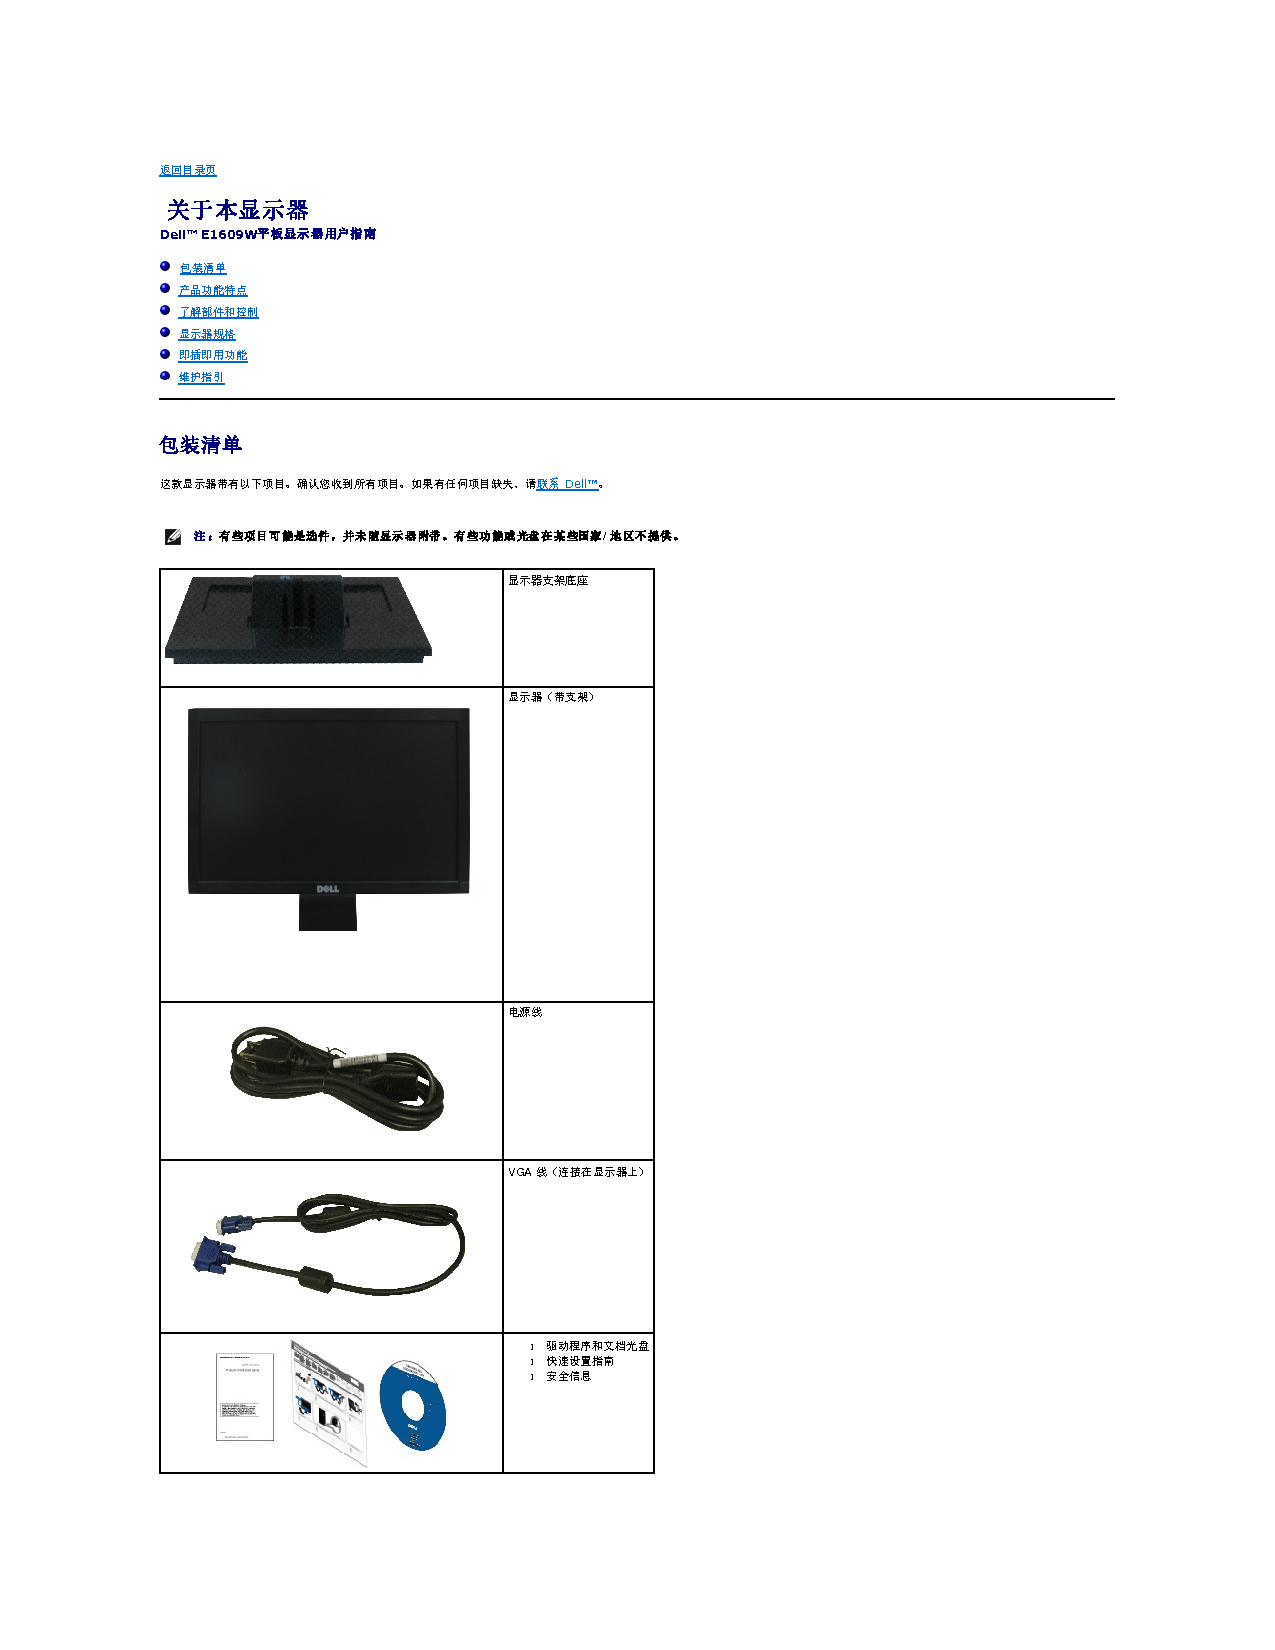 戴尔 Dell E1609W 用户指南 第1页